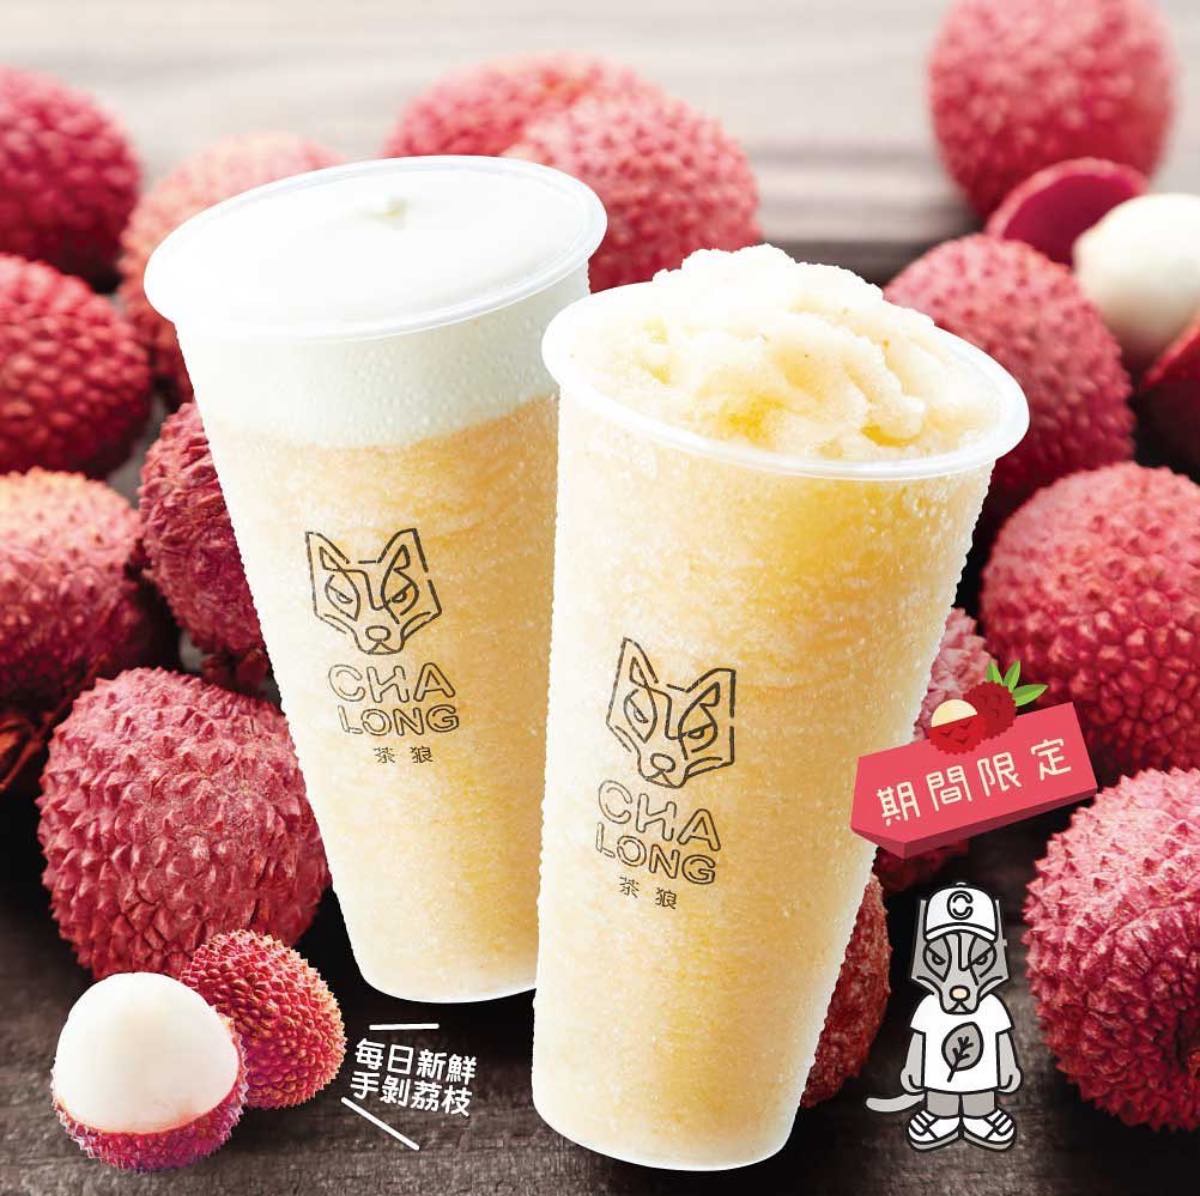 Cha Long HK - New summer drink